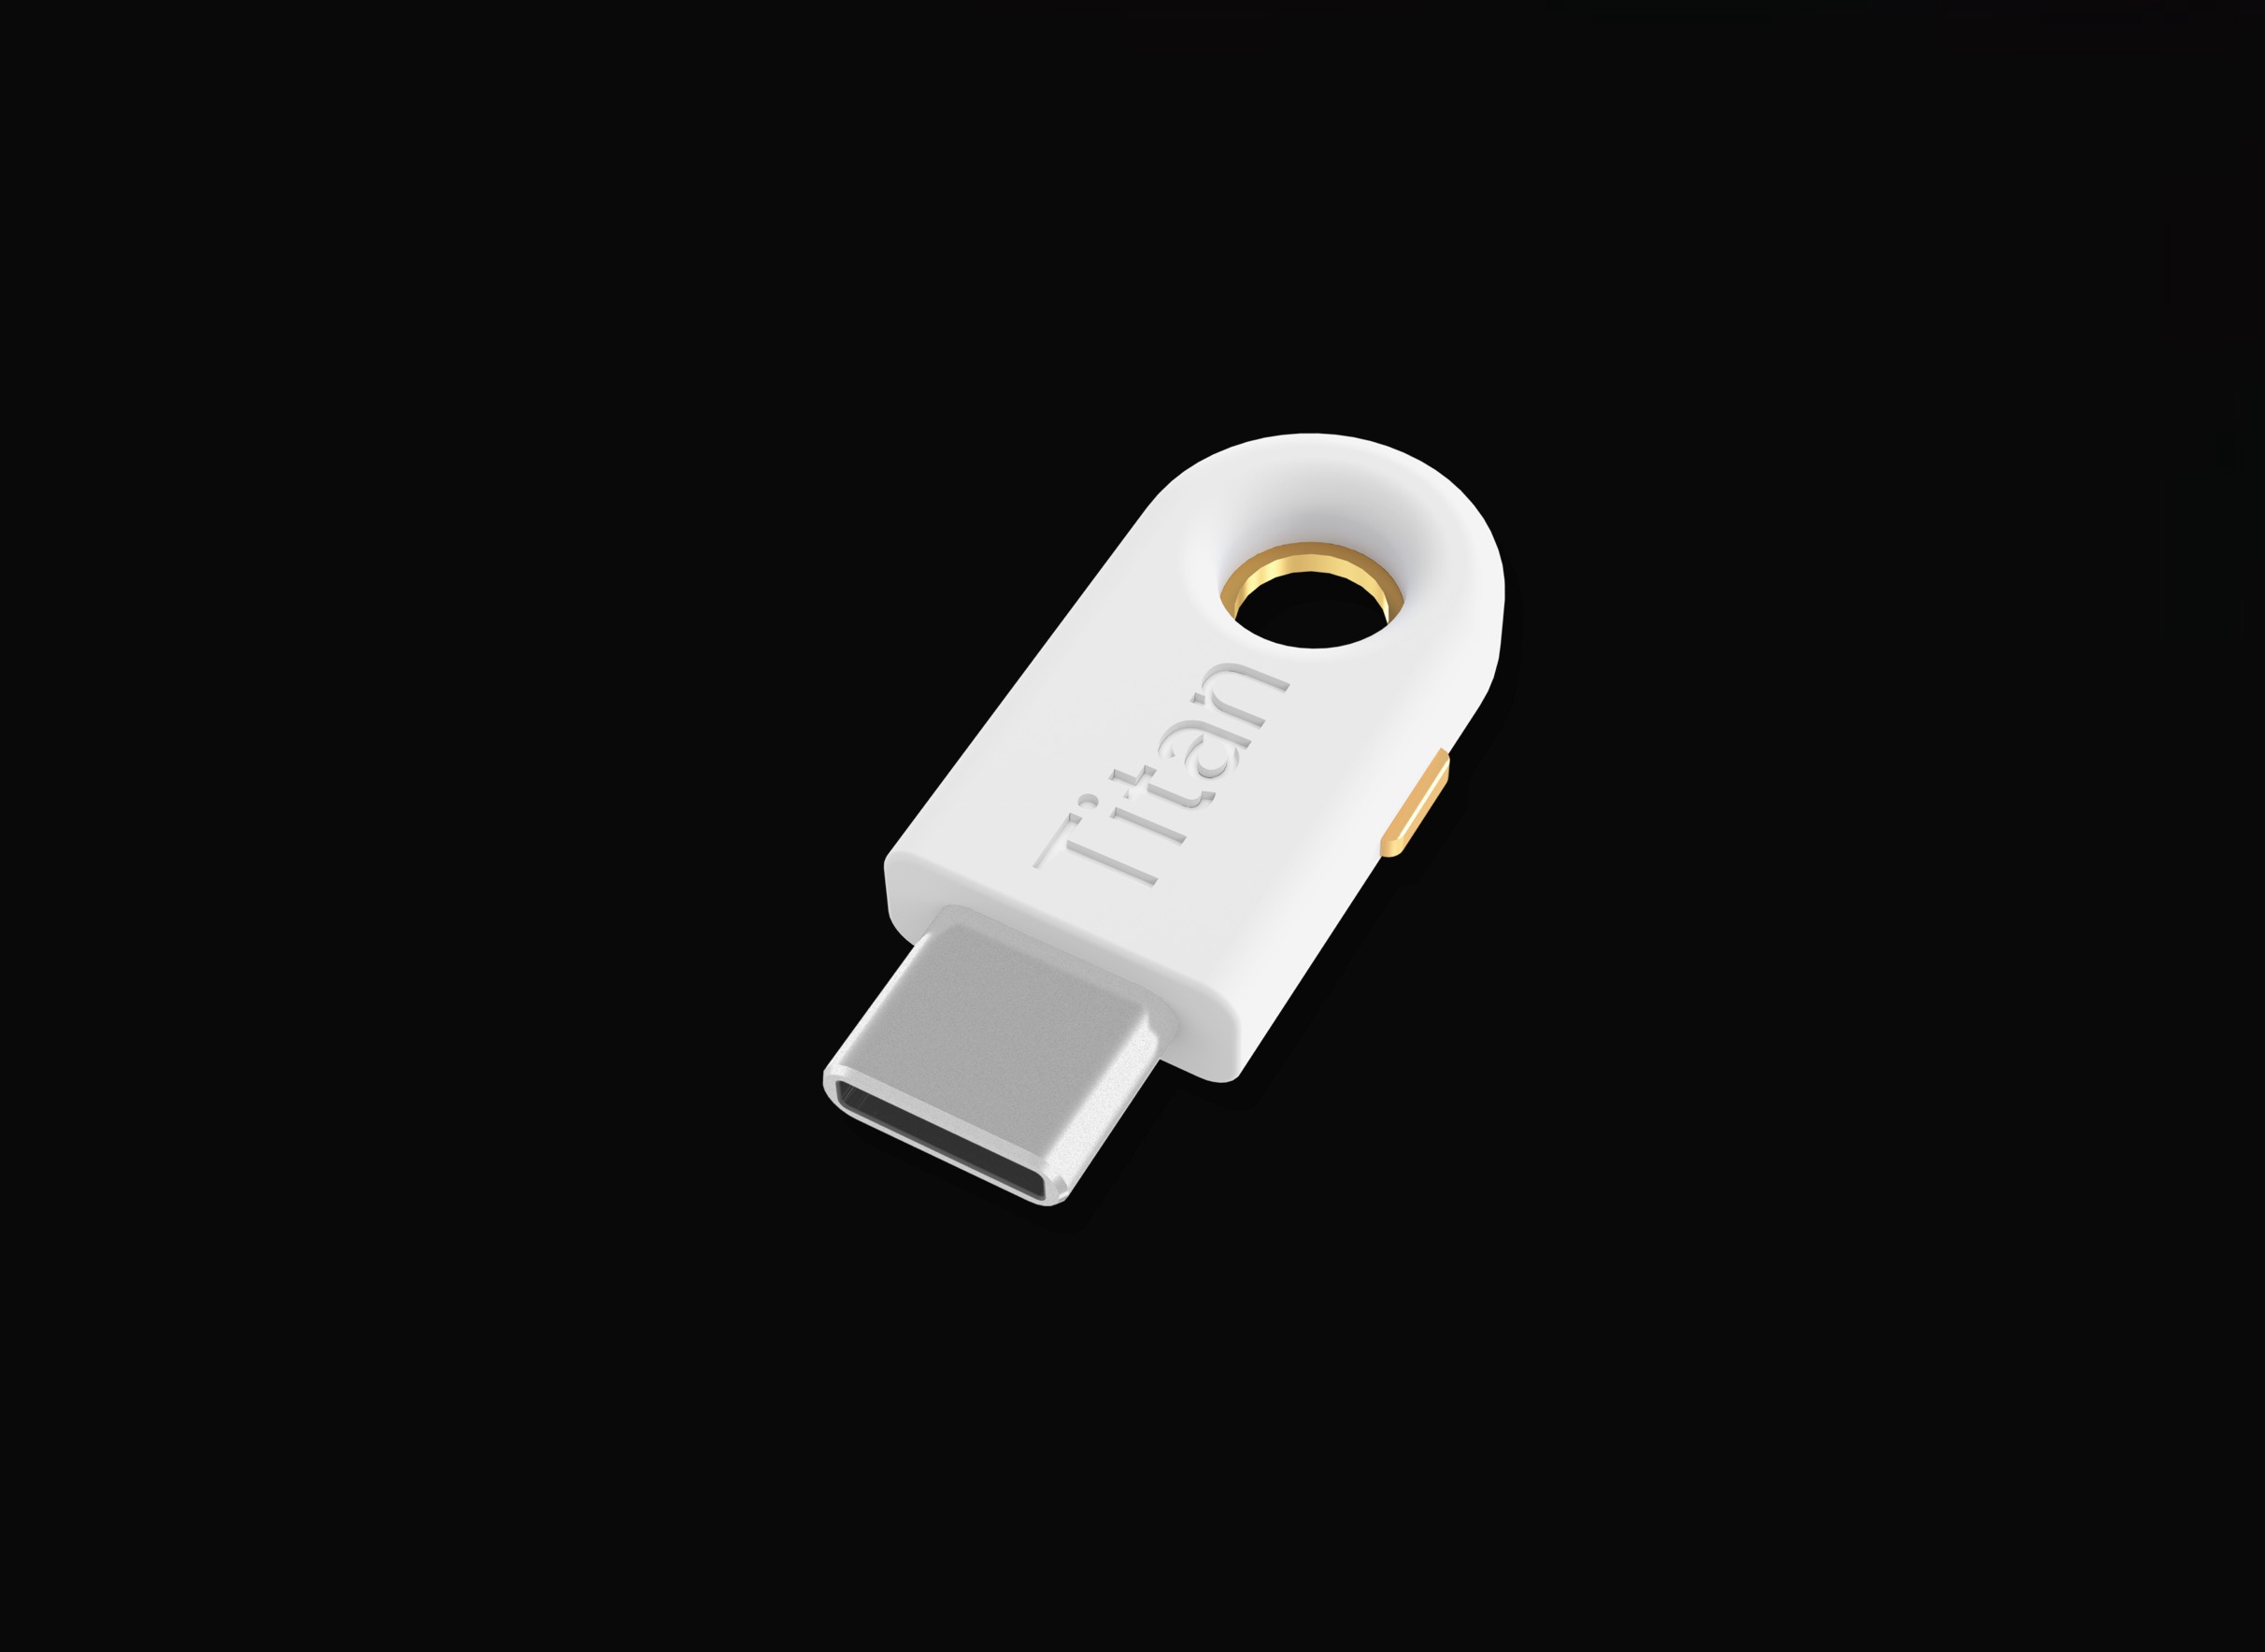 Google updates its Titan security keys with USB-C – TechCrunch